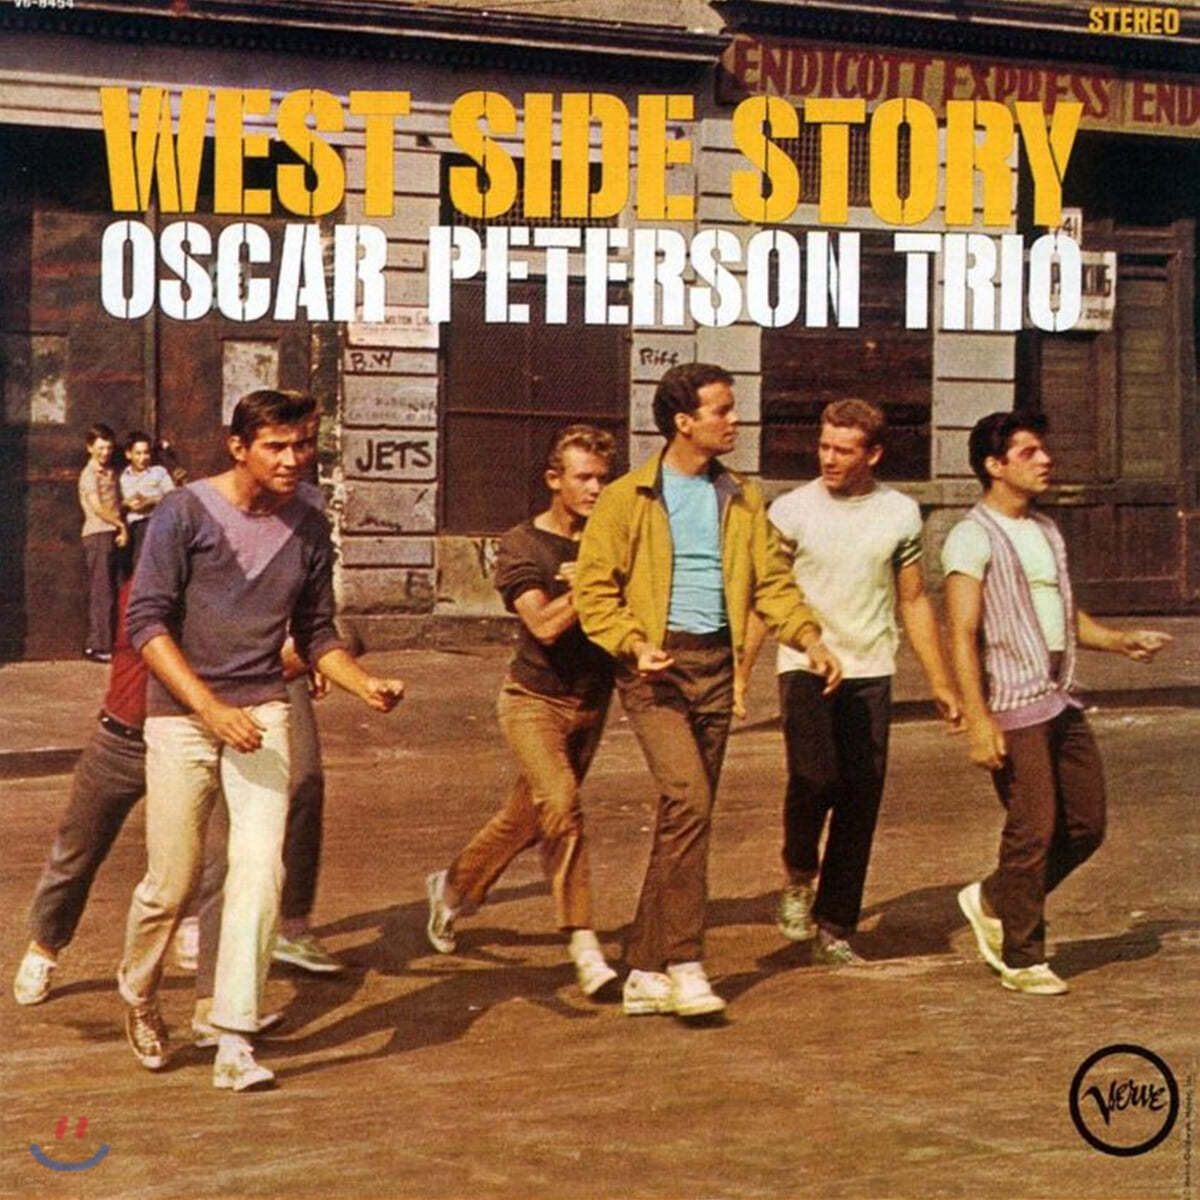 Oscar Peterson Trio (오스카 피터슨 트리오) - West Side Story [2LP]